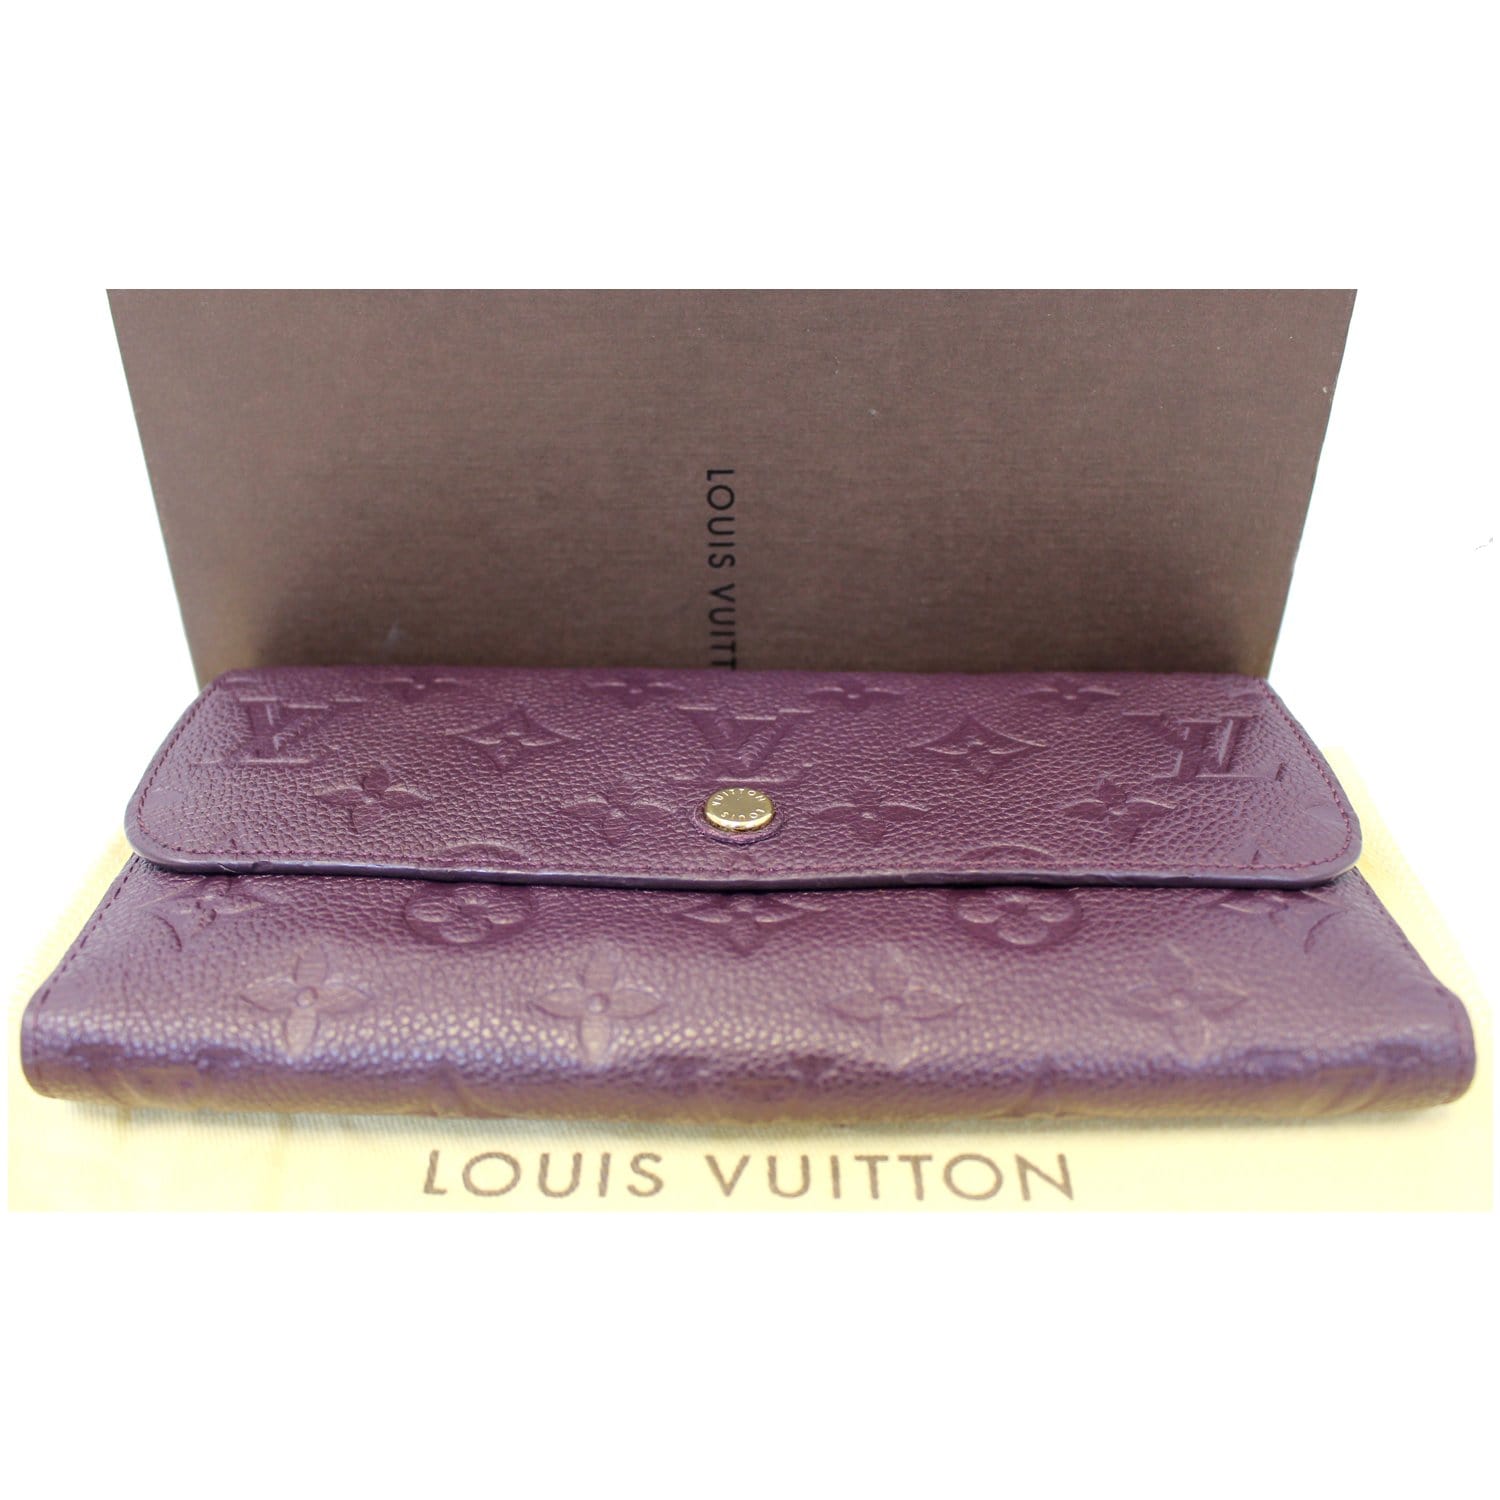 Authentic Louis Vuitton Monogram Empreinte Book Cover Purple